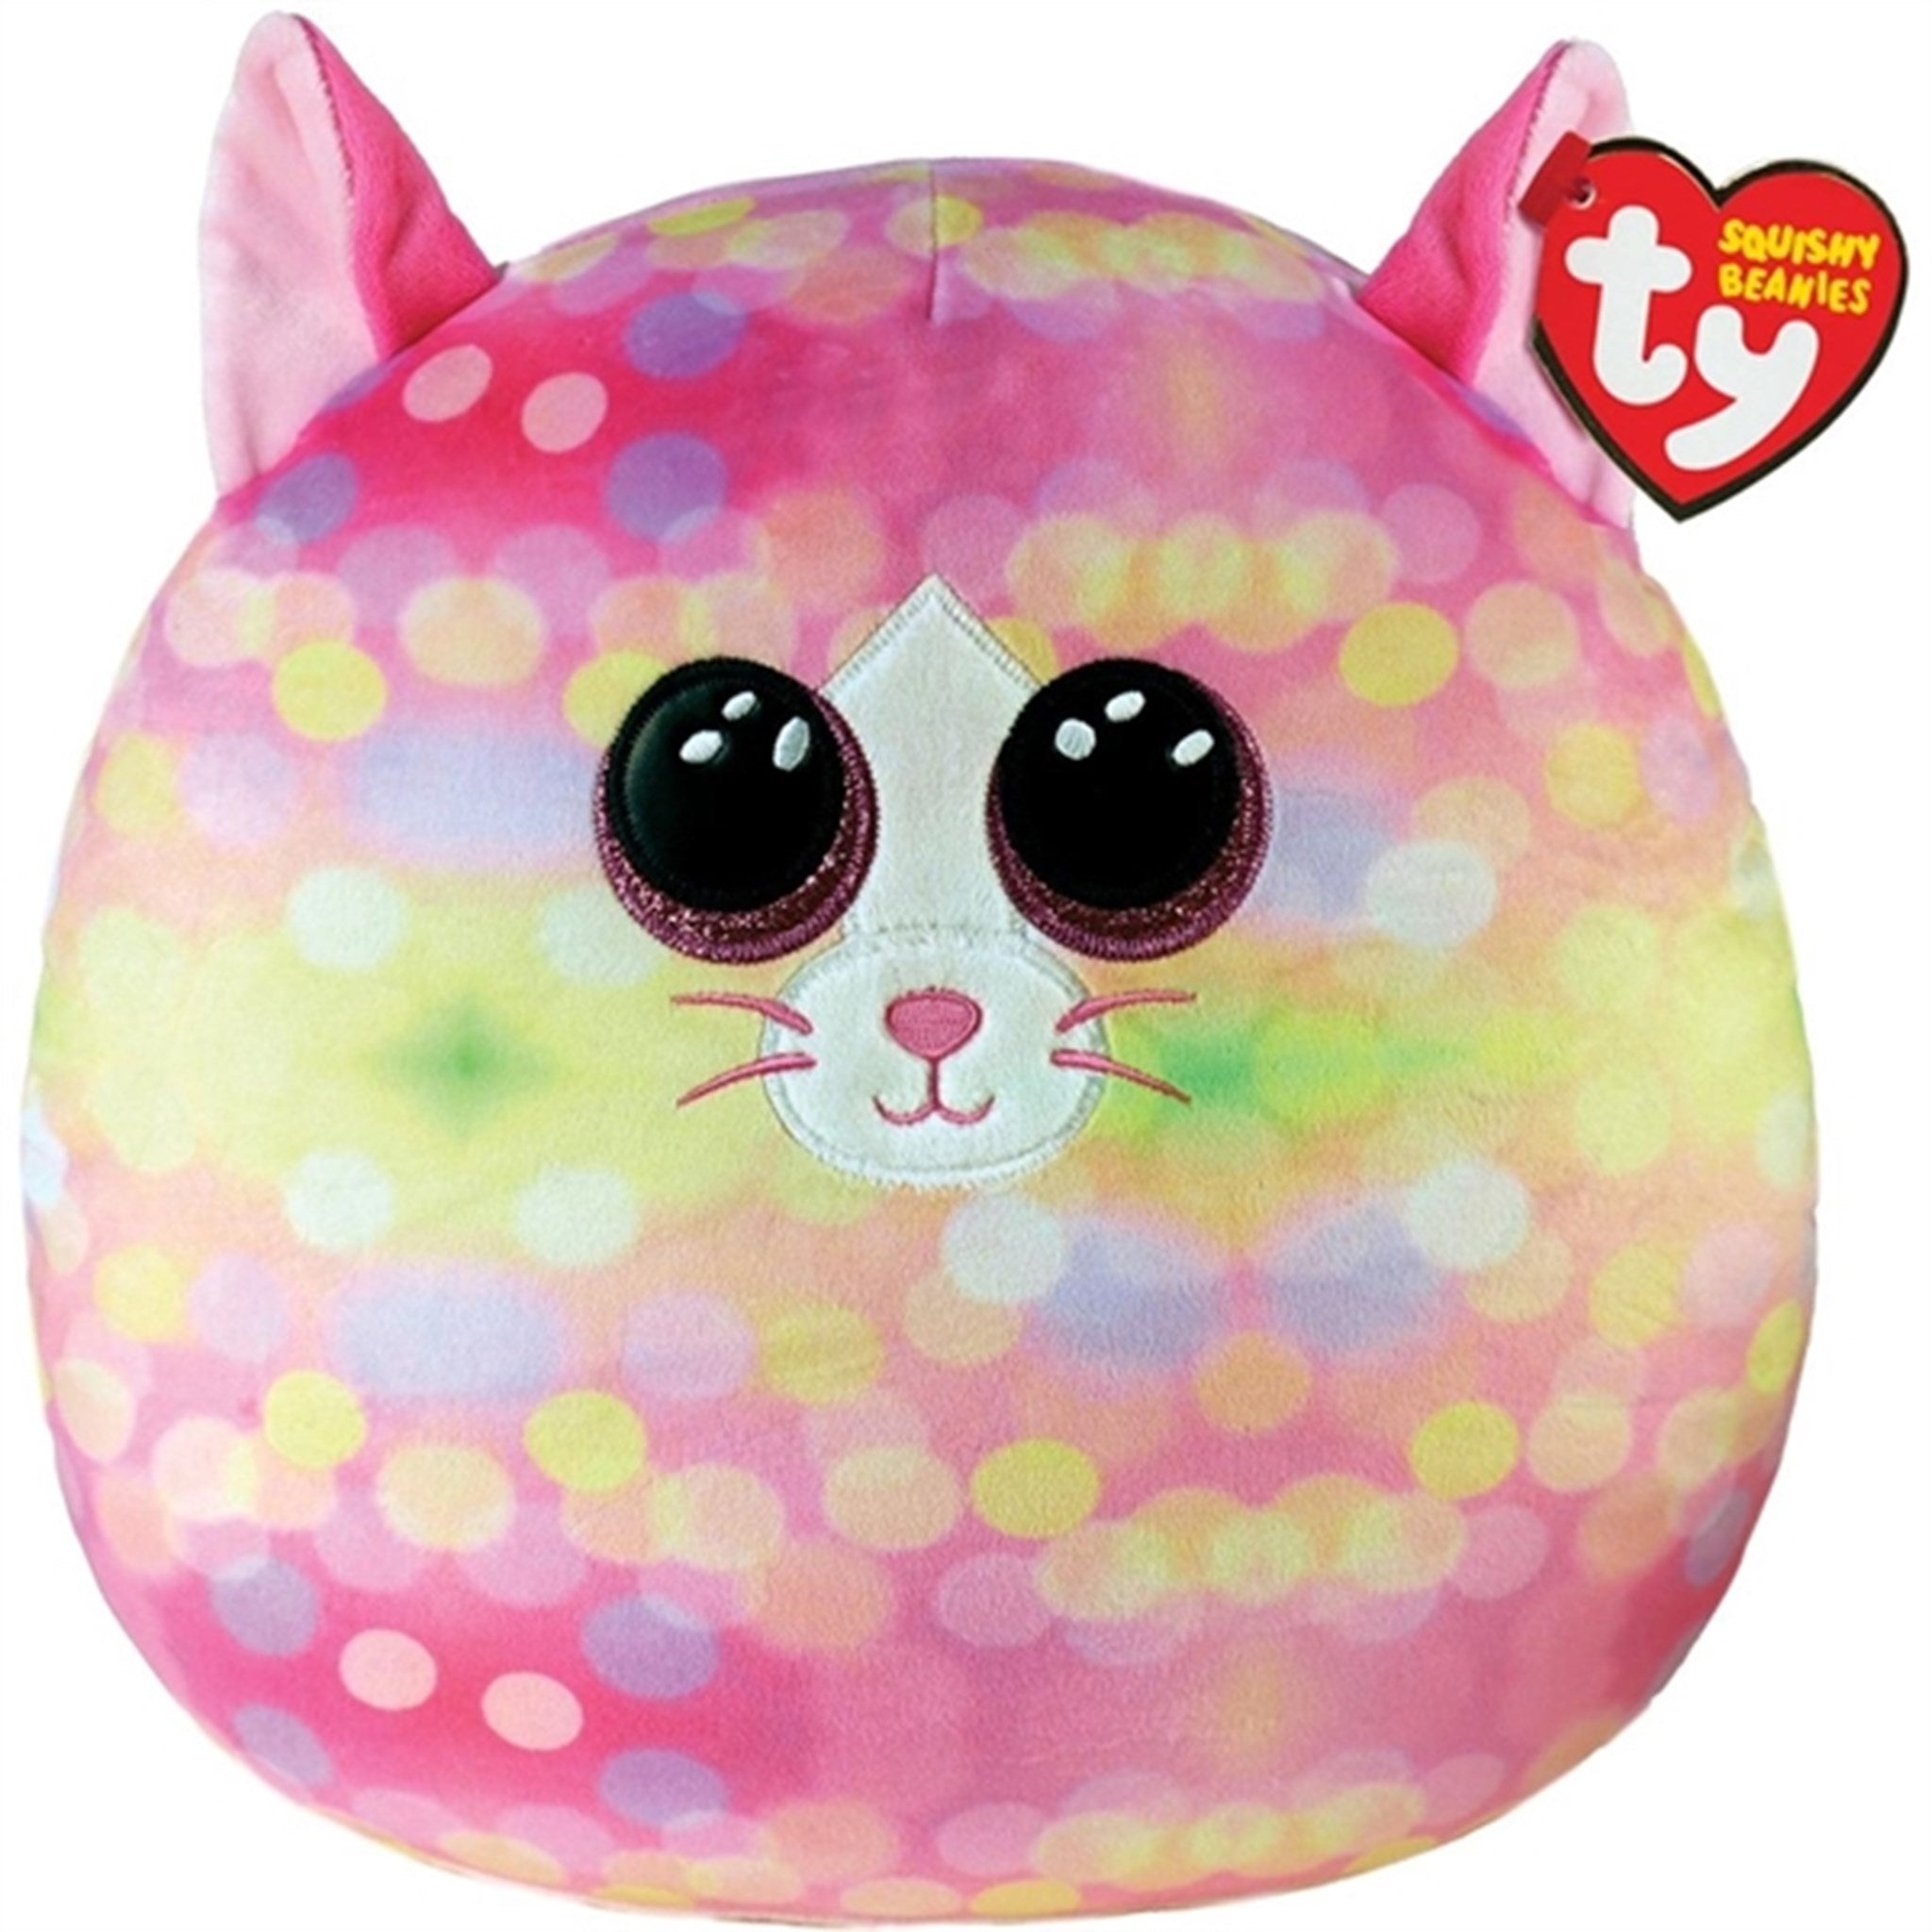 TY Squishy Beanies Sonny - Pink Pattern Kat Squish 35cm